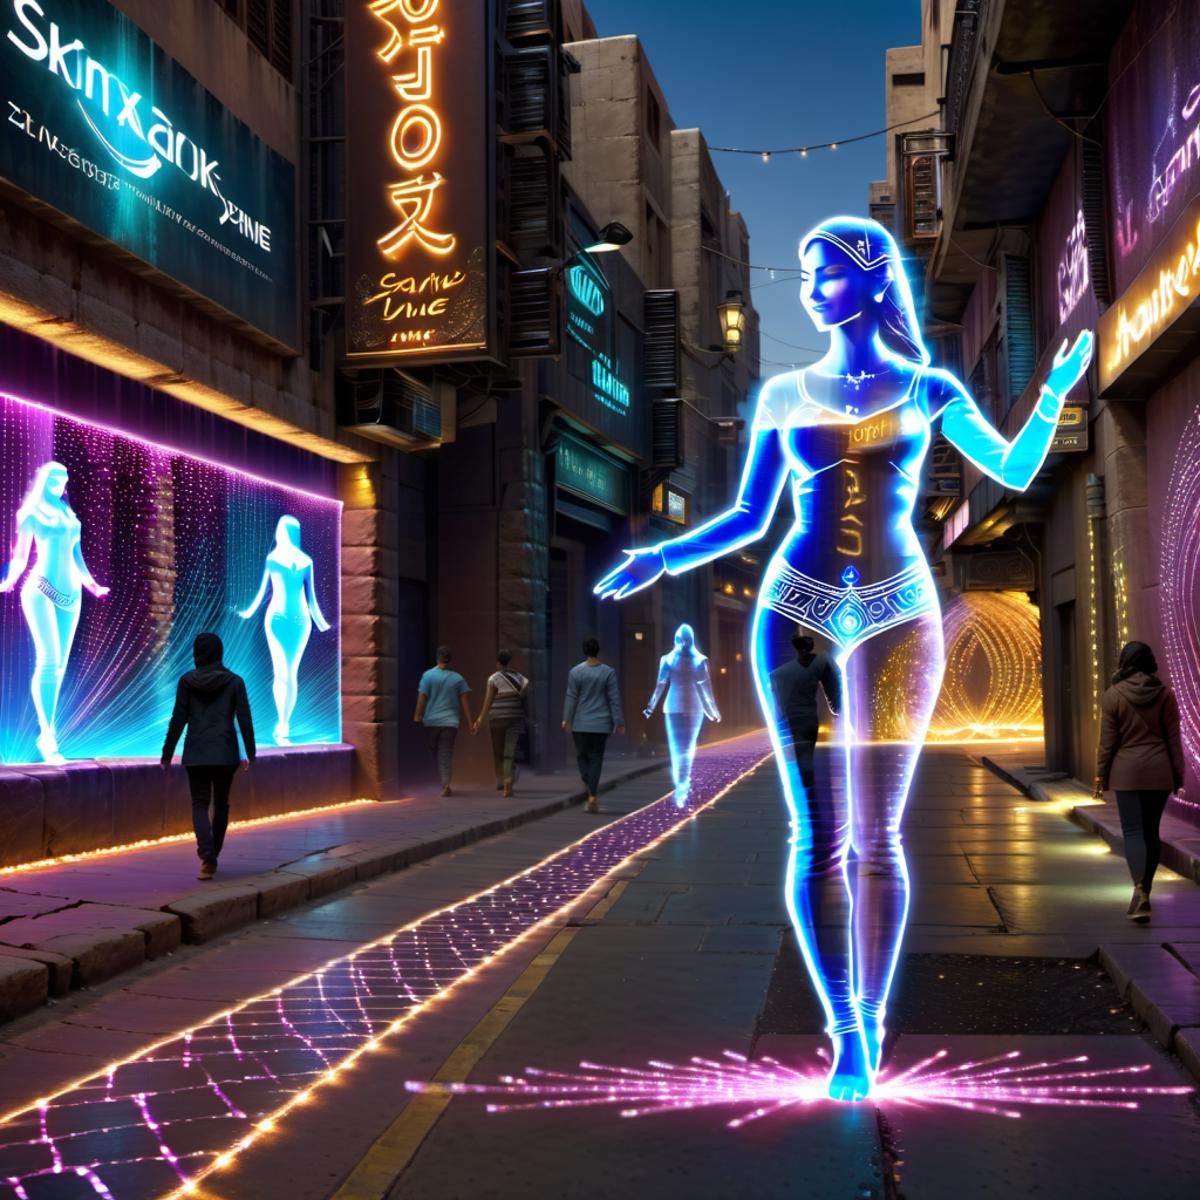 Transparent Hologram Women - Cyberpunk Influence image by Rysk